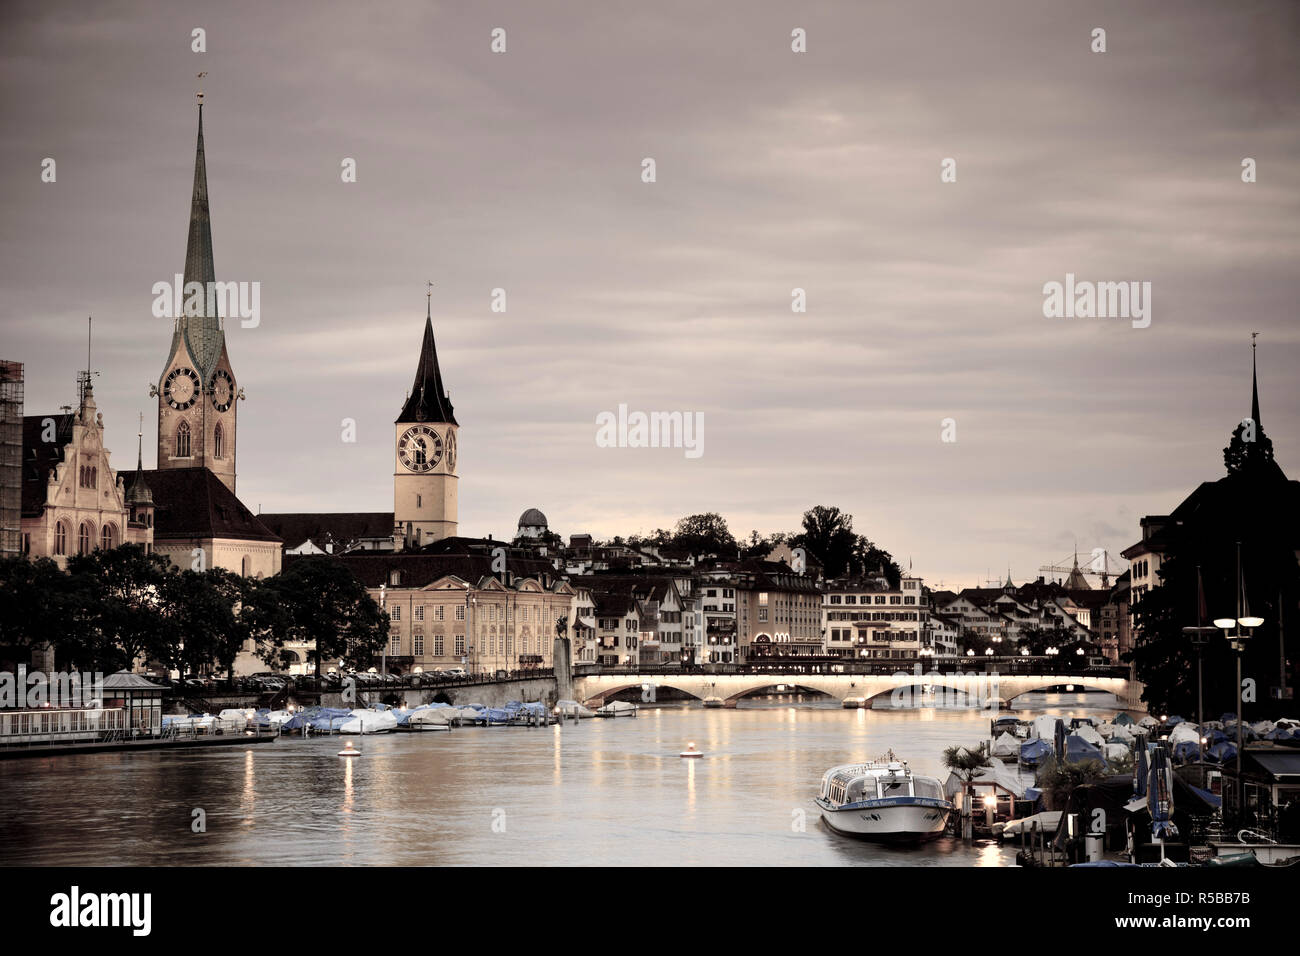 Switzerland, Zurich, Old town and Limmat River Stock Photo